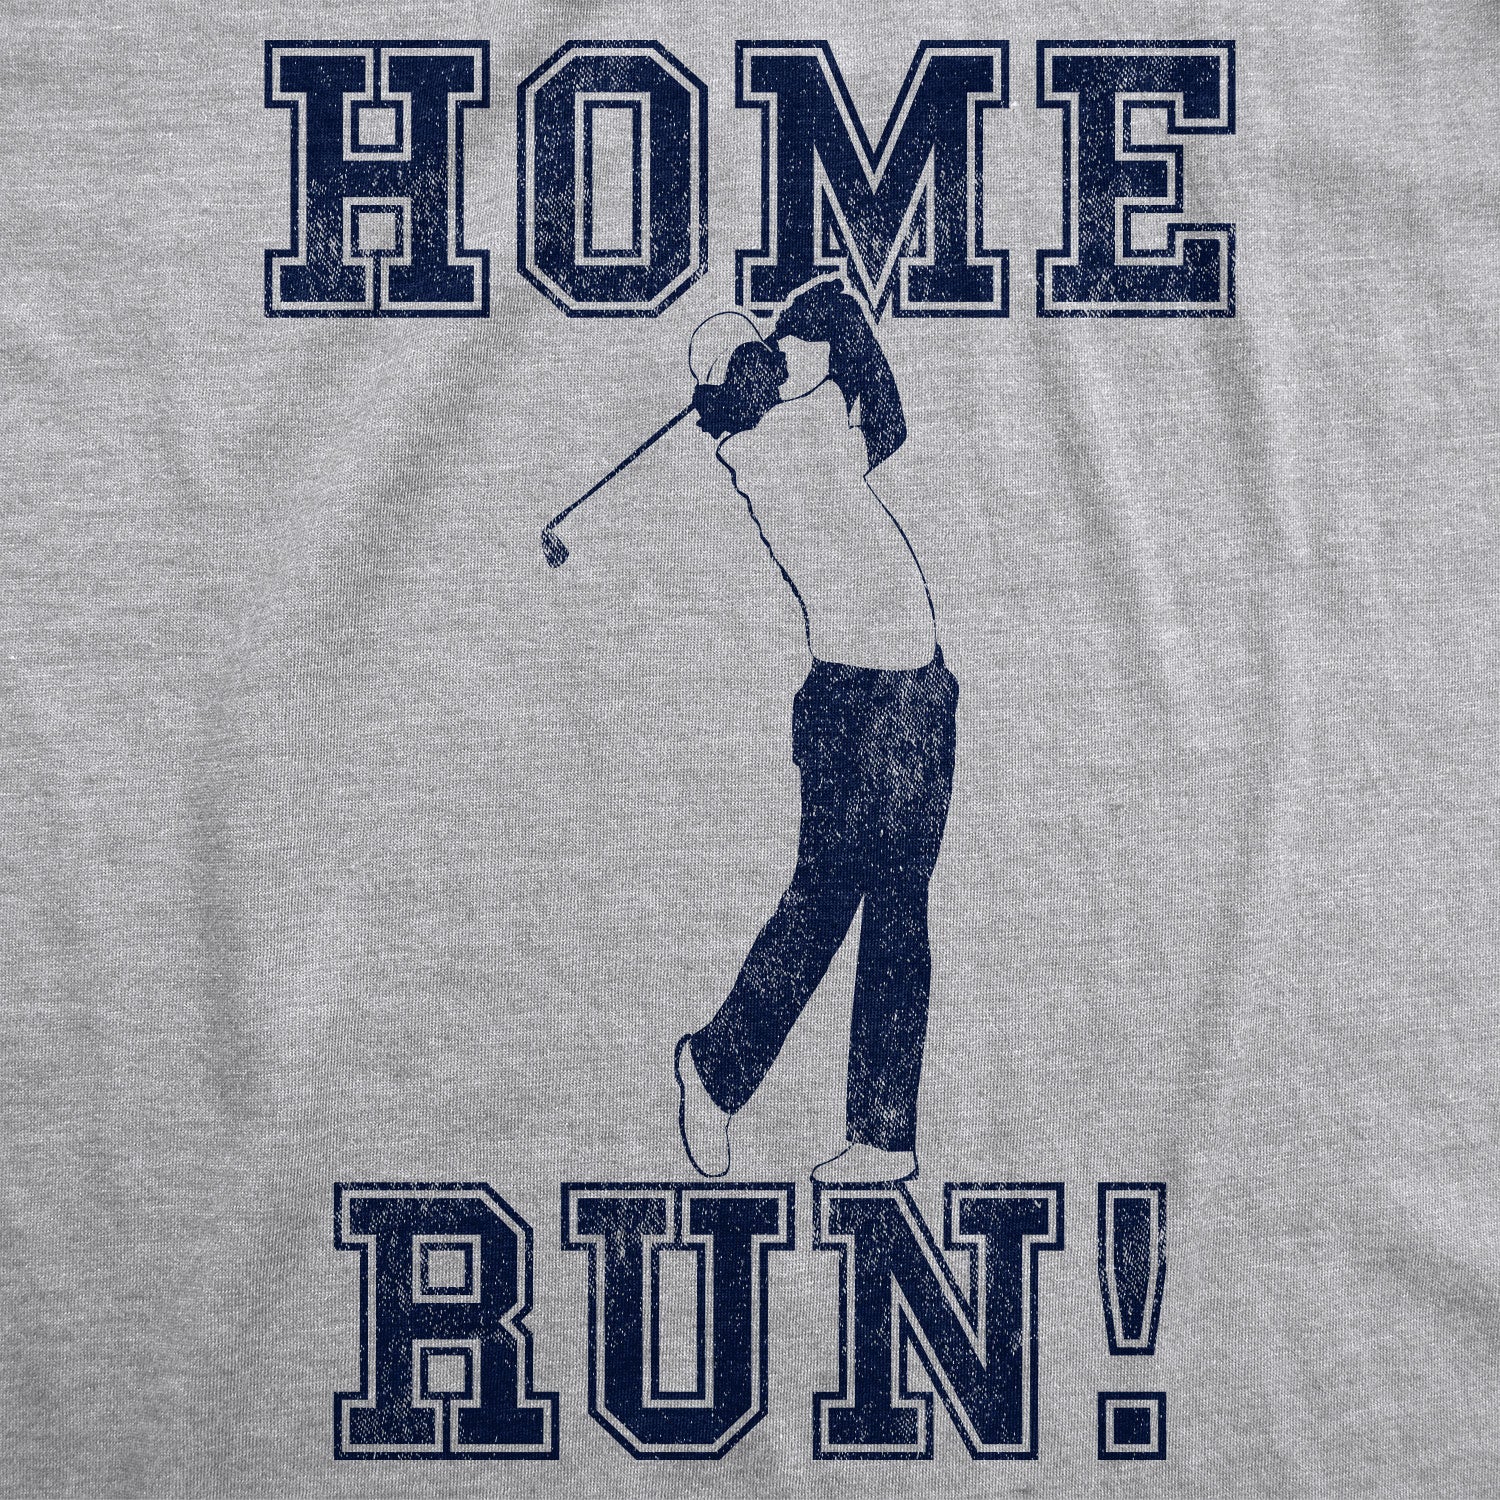 Funny Light Heather Grey - Home Run Home Run Golf Mens T Shirt Nerdy Baseball Golf Tee